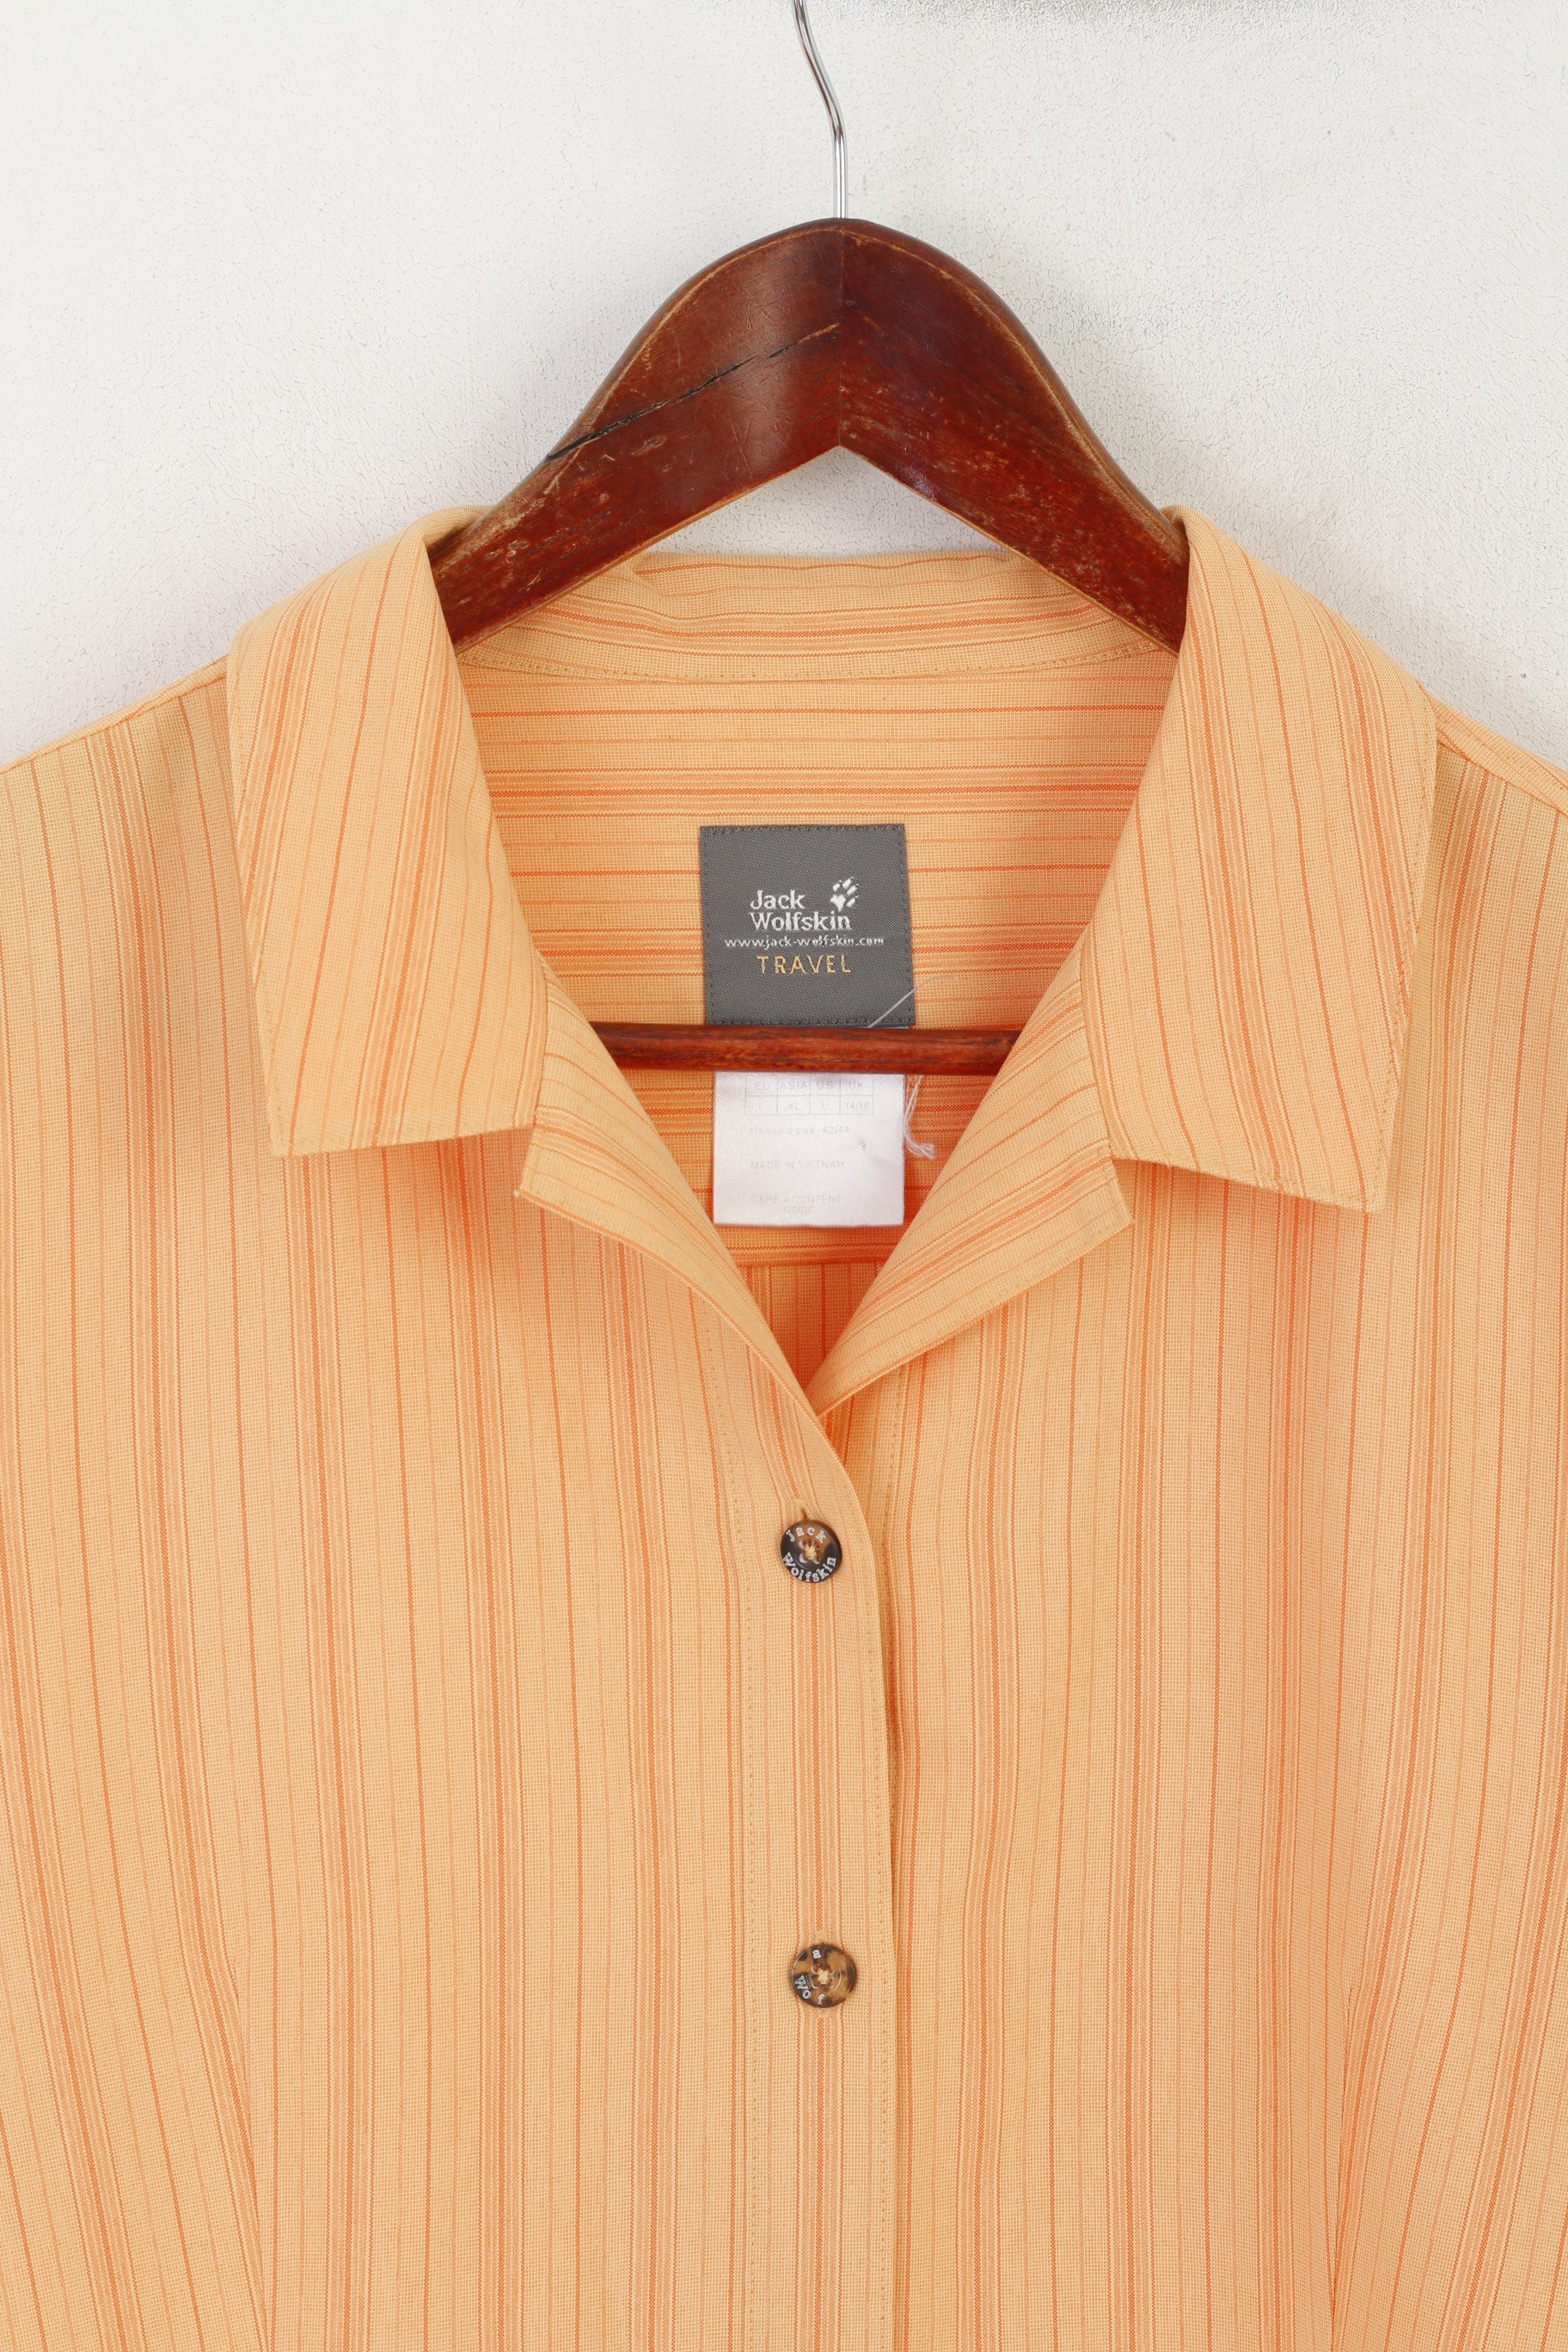 L Striped Retrospect Jack Shirt Outdoor Casual Women – 14/16 Clothes Wolfskin Orange Travel